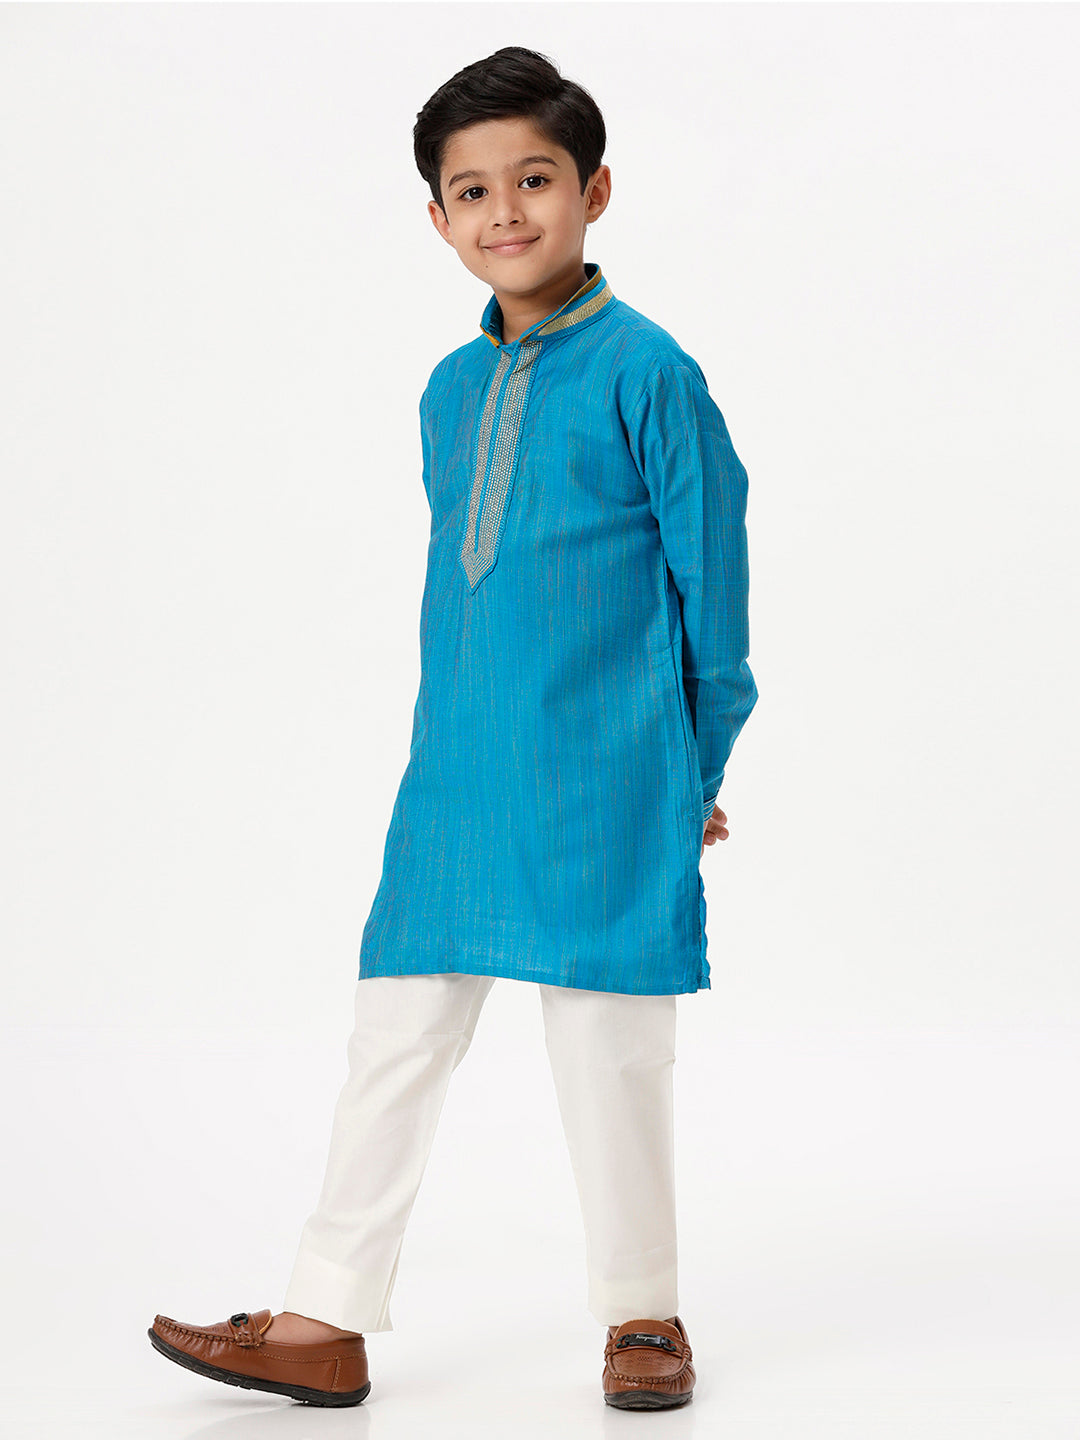 Boys Cotton Embellished Neckline Full Sleeves Sky Blue Kurta with Pyjama Pant Combo EMD2-side view